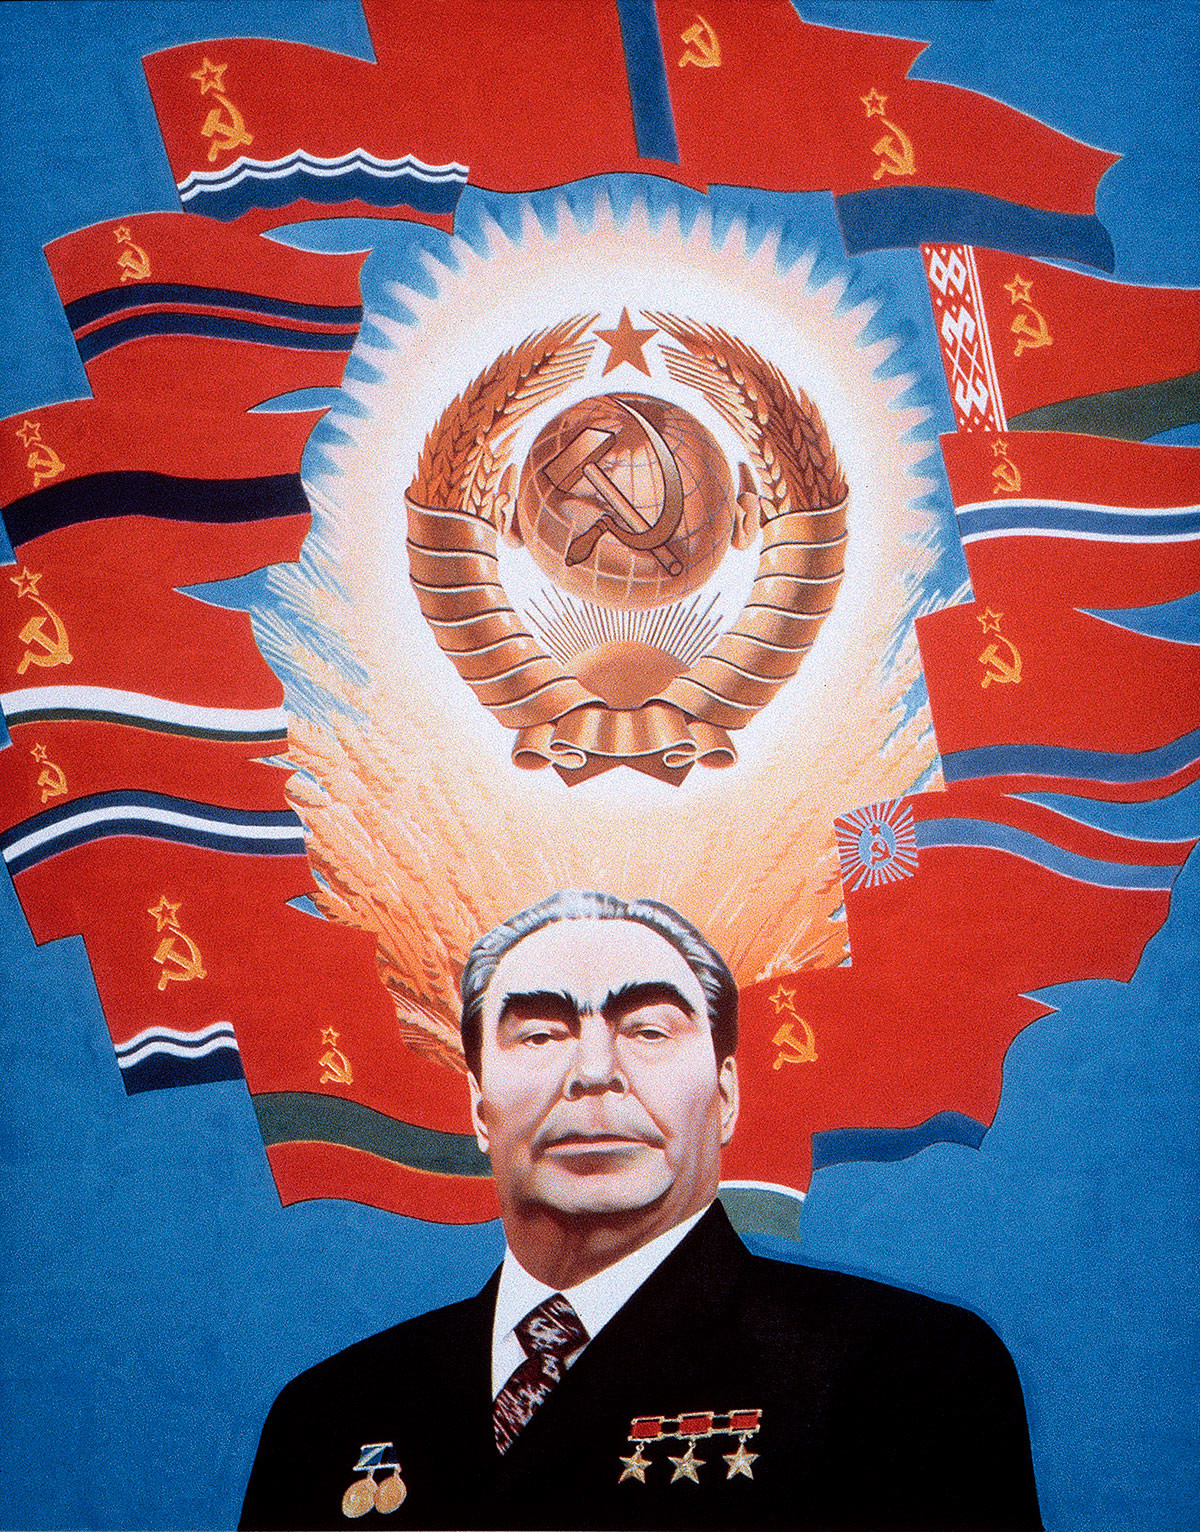 Eric Bulatov. Brézhnev. El espacio soviético, 1977

